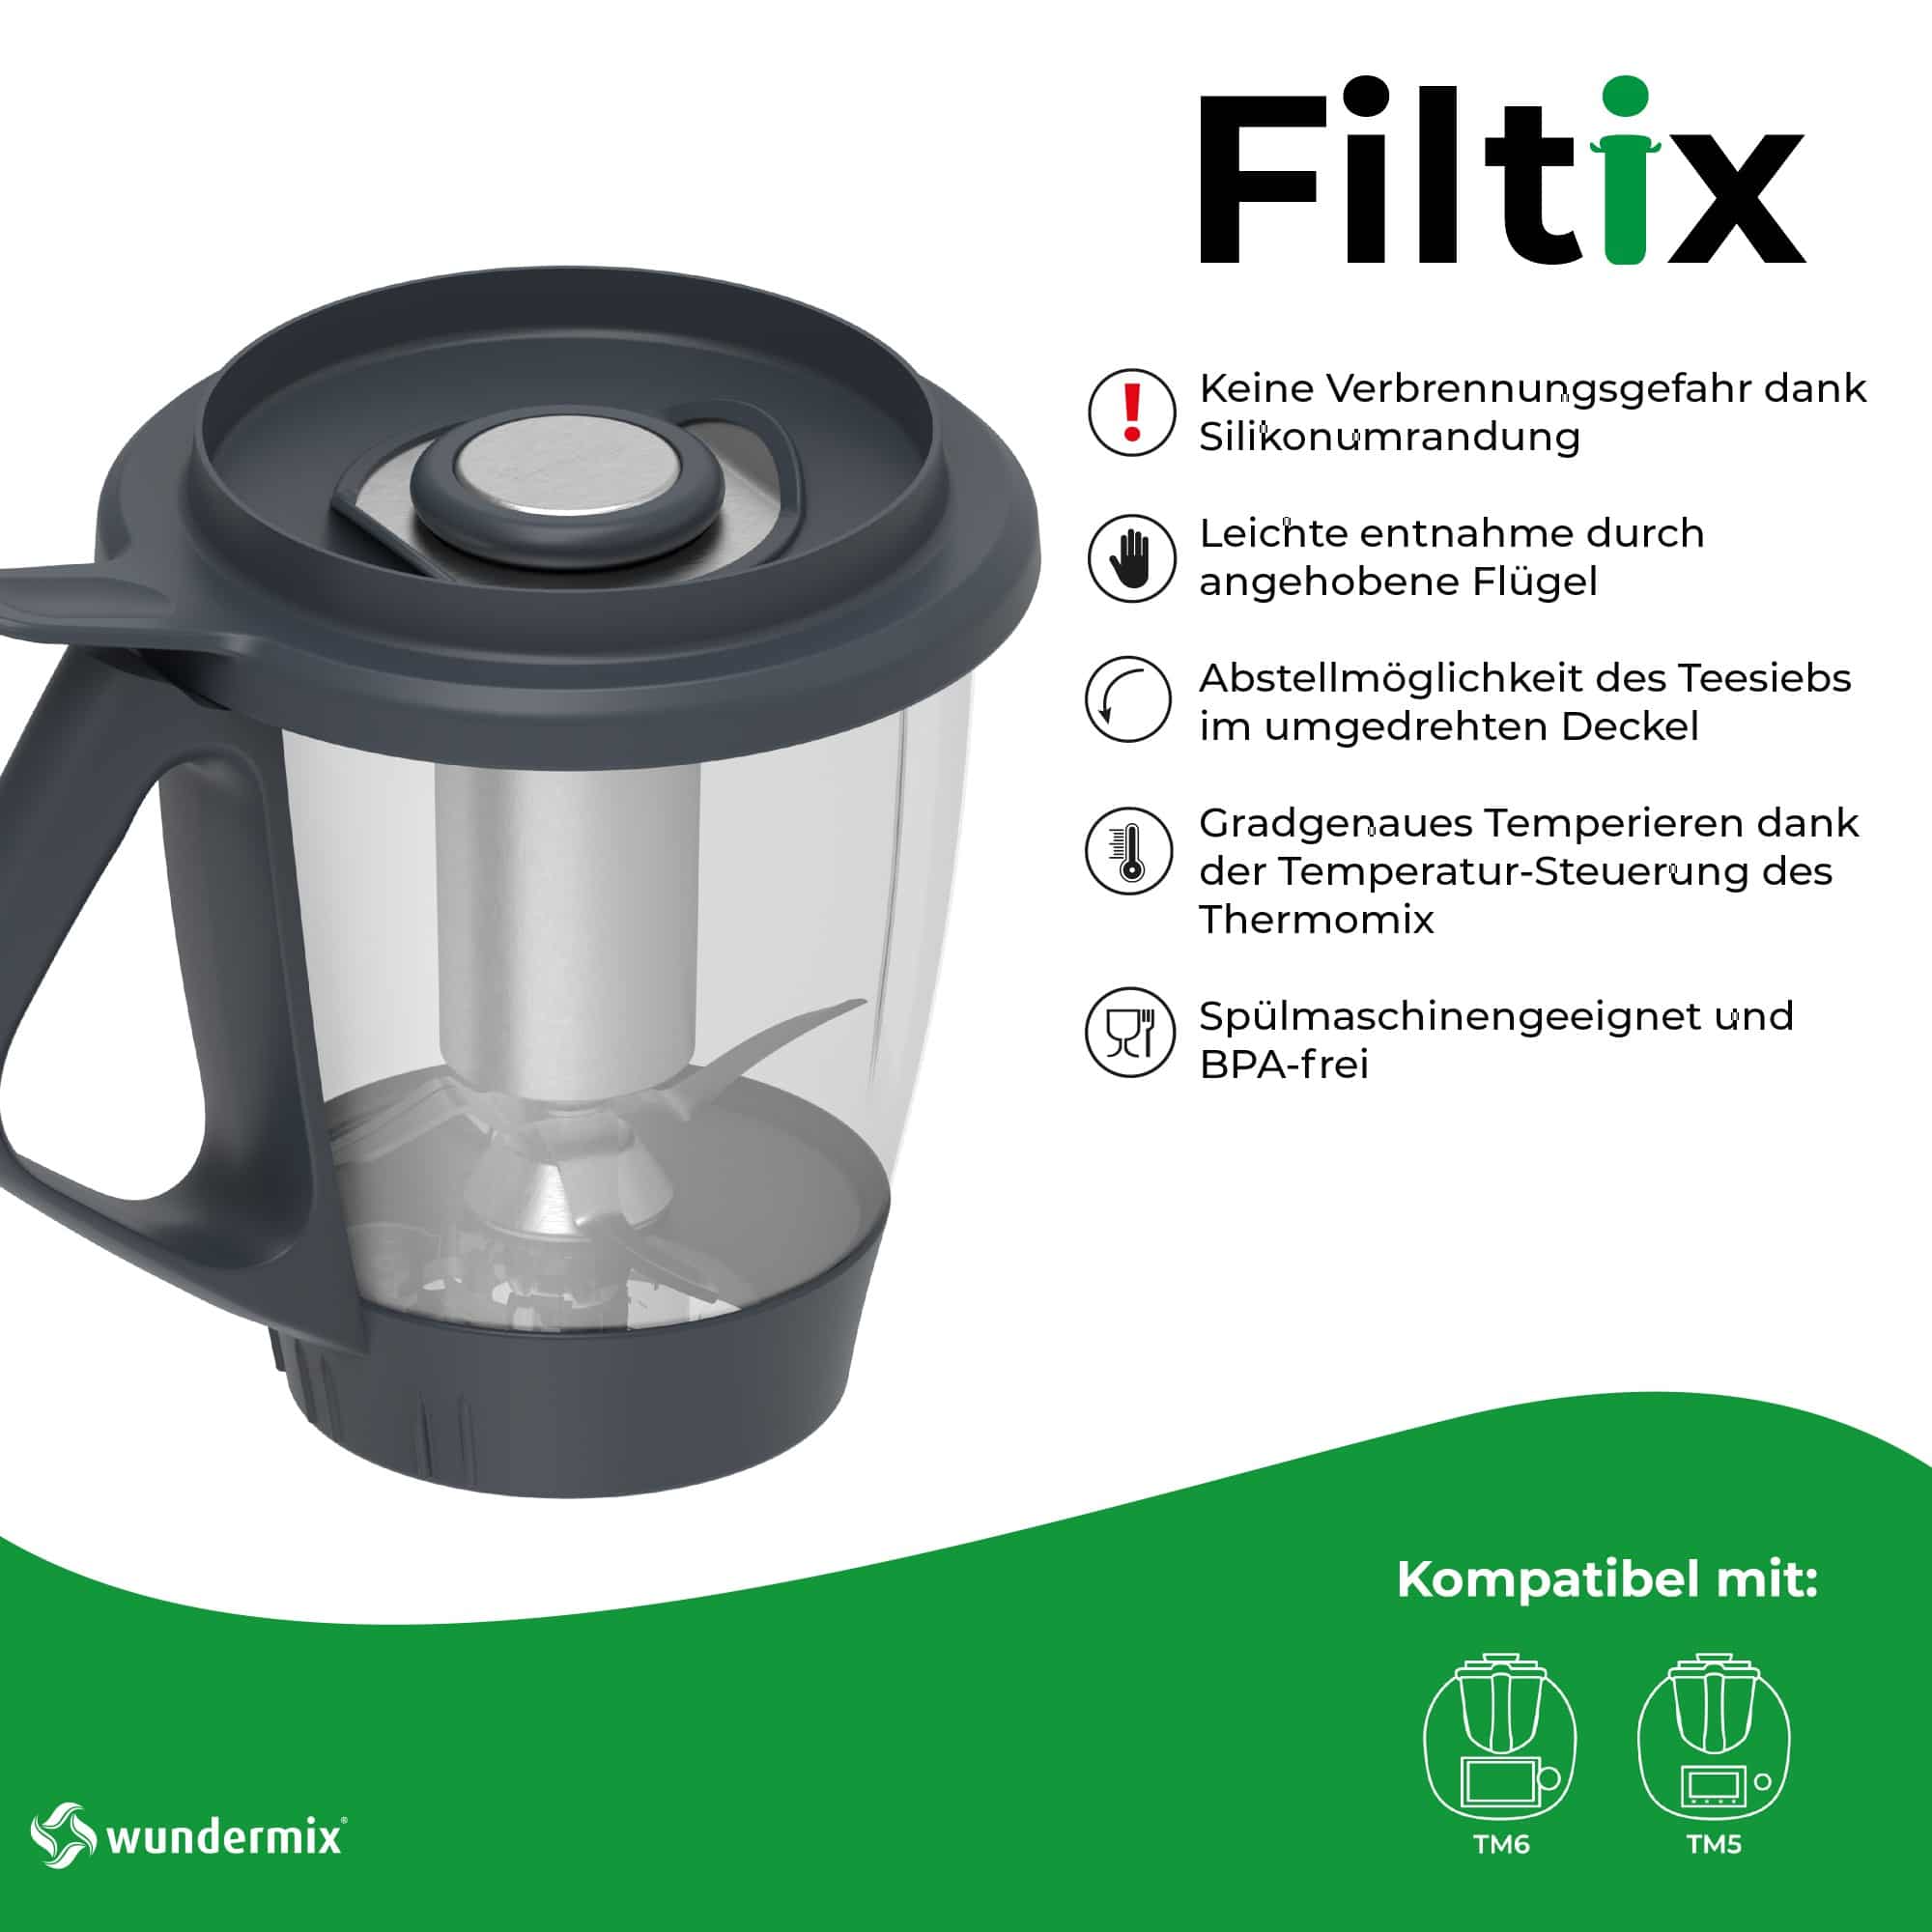 Filtix® | Teesieb für Thermomix TM6, TM5 - Wundermix GmbH